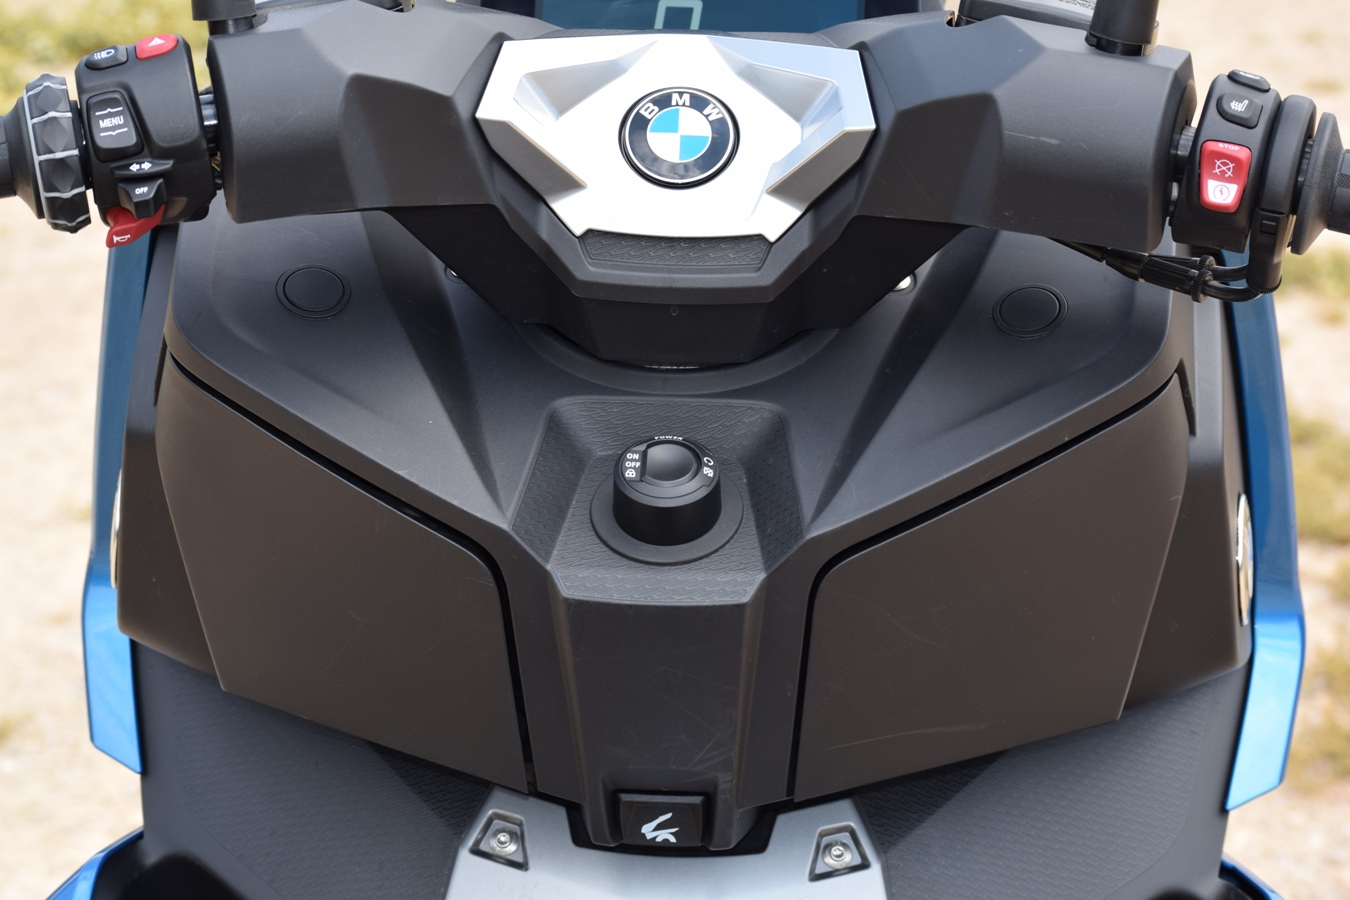 BMW C 400 X details 10